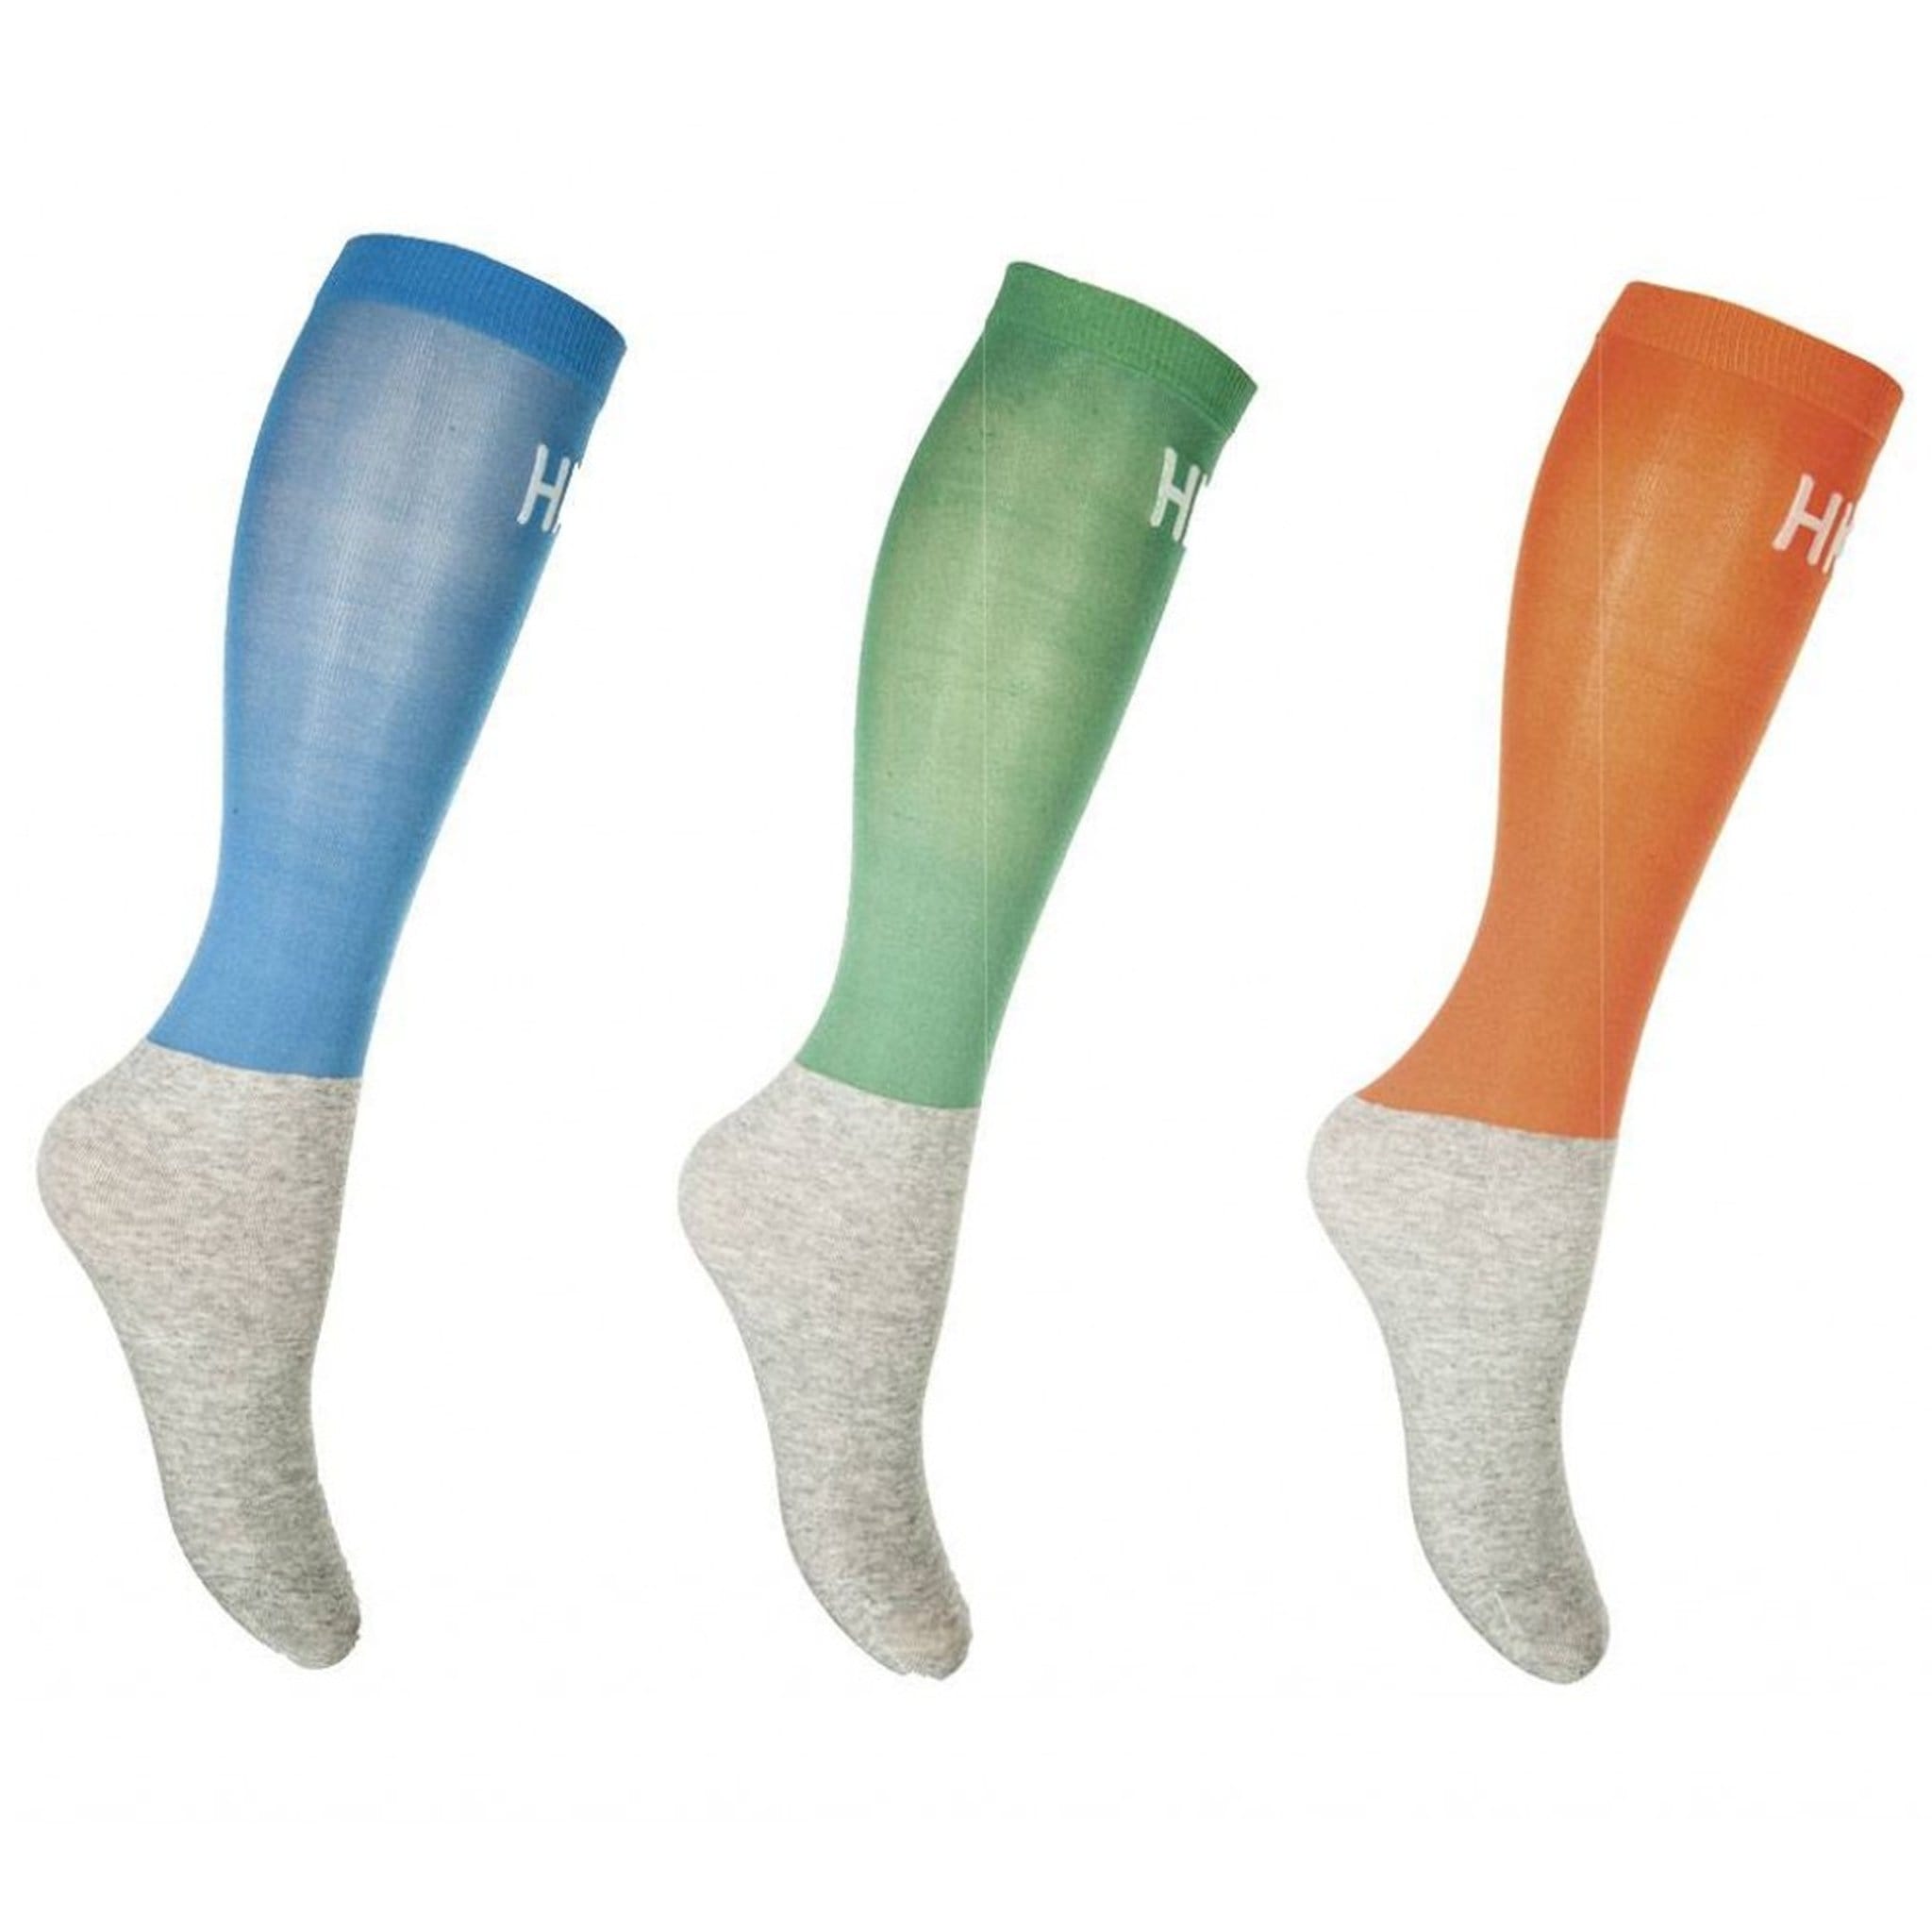 Toggi Lowick Riding Socks 3 Pack (Blue, Green, Orange) 5780.